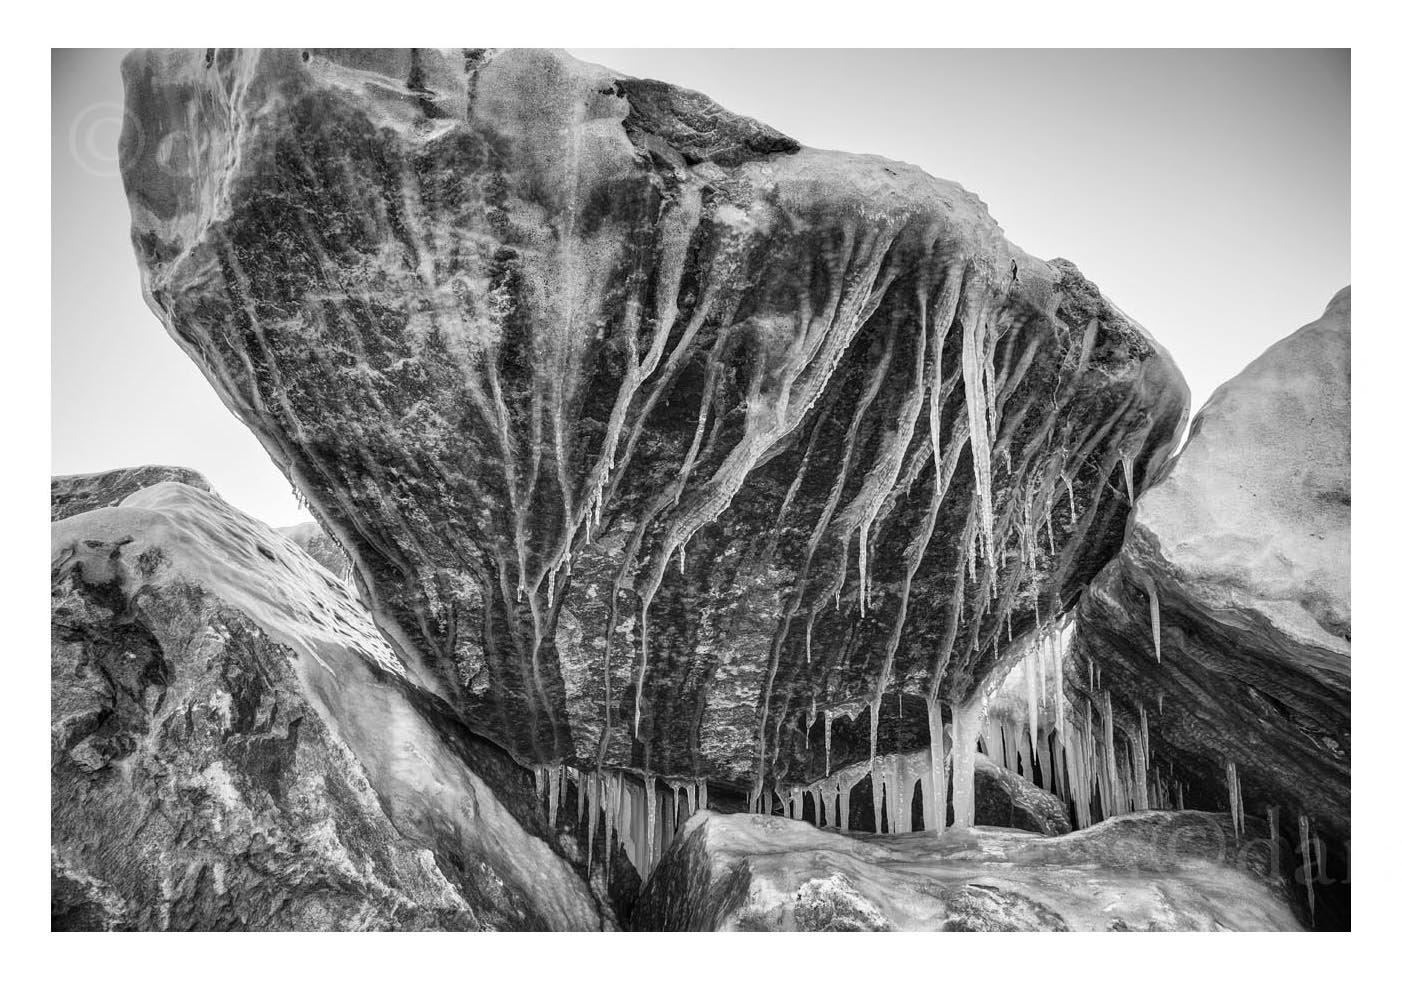 Icy Rocks